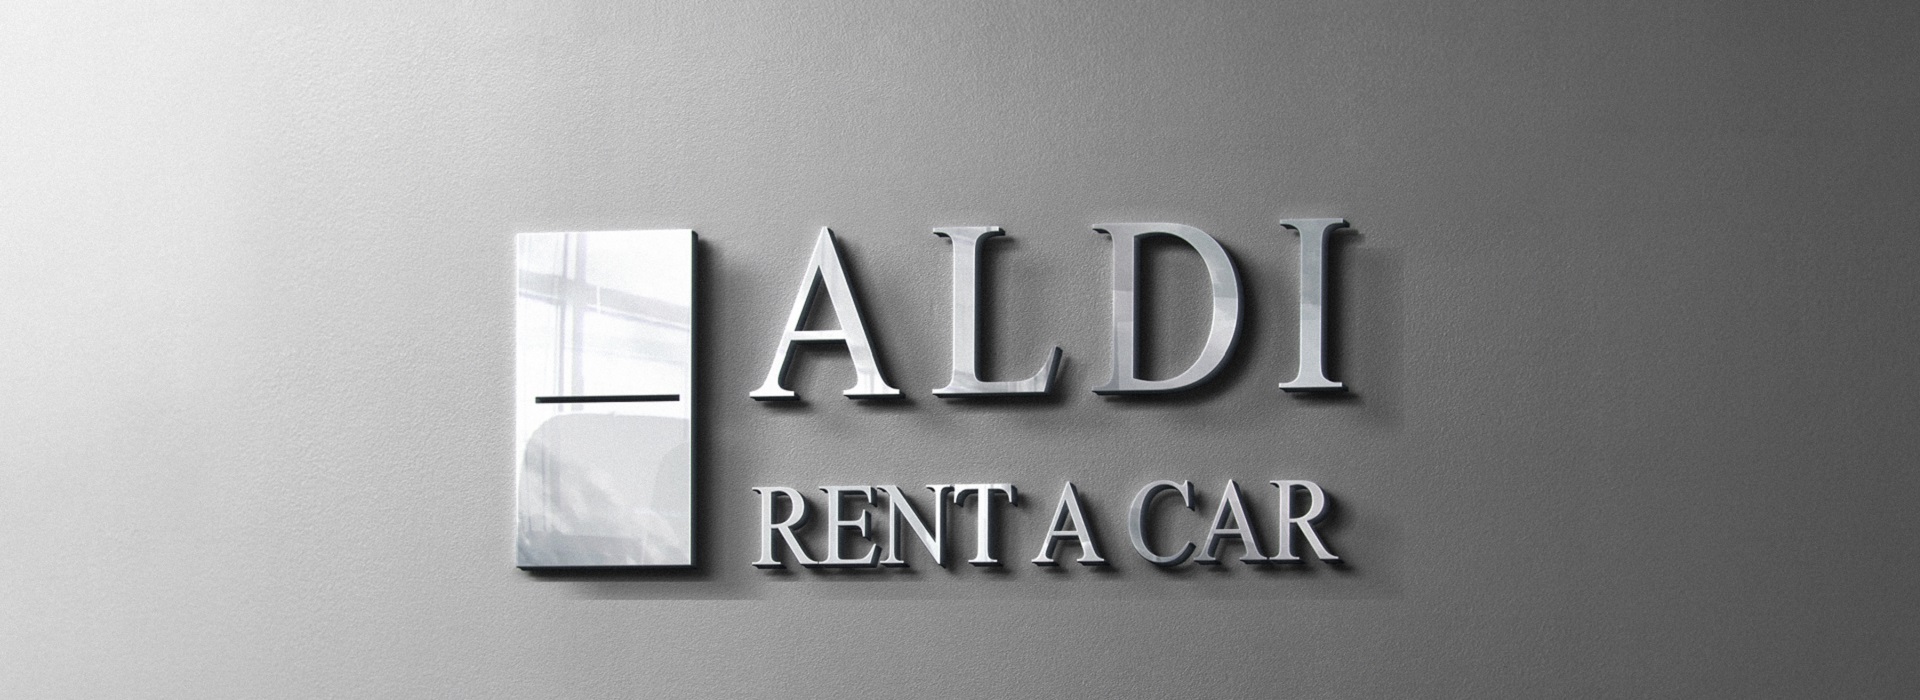 Rent a car Belgrade ALDI | DAGS